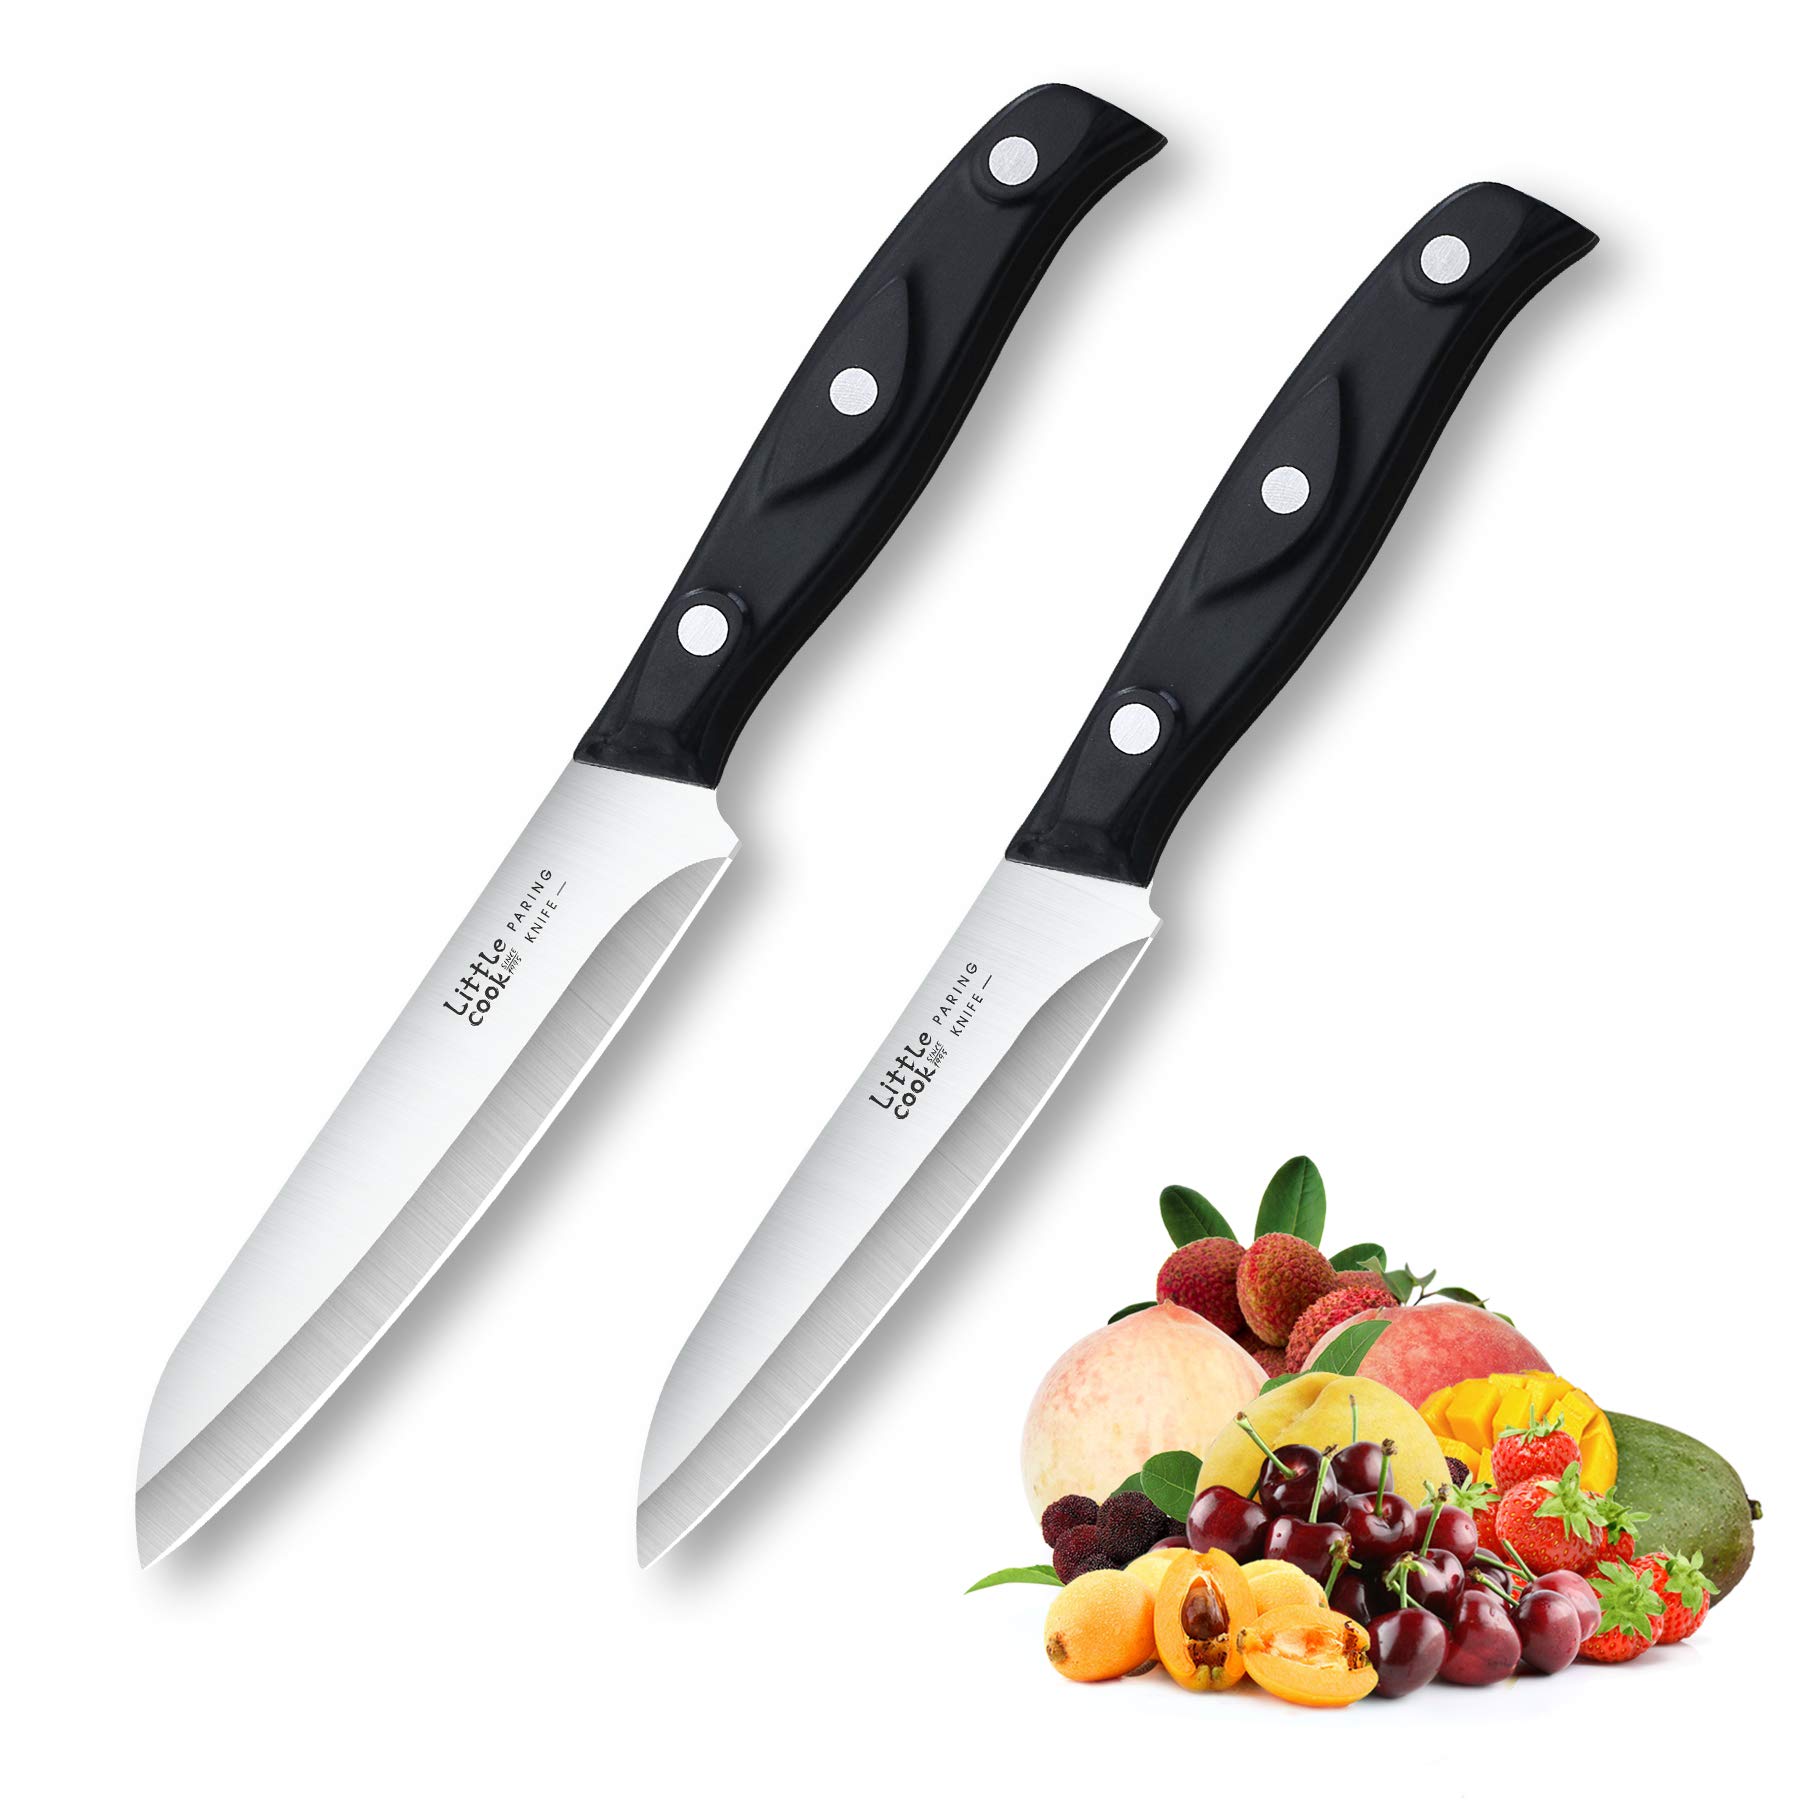 LITTLE COOK SINCE 19 2PcS Paring Knife - Little cook Paring Knife Set - Ultra Sharp Kitchen Knife - Fruit Knife - german stainless Steel - ABS Handle